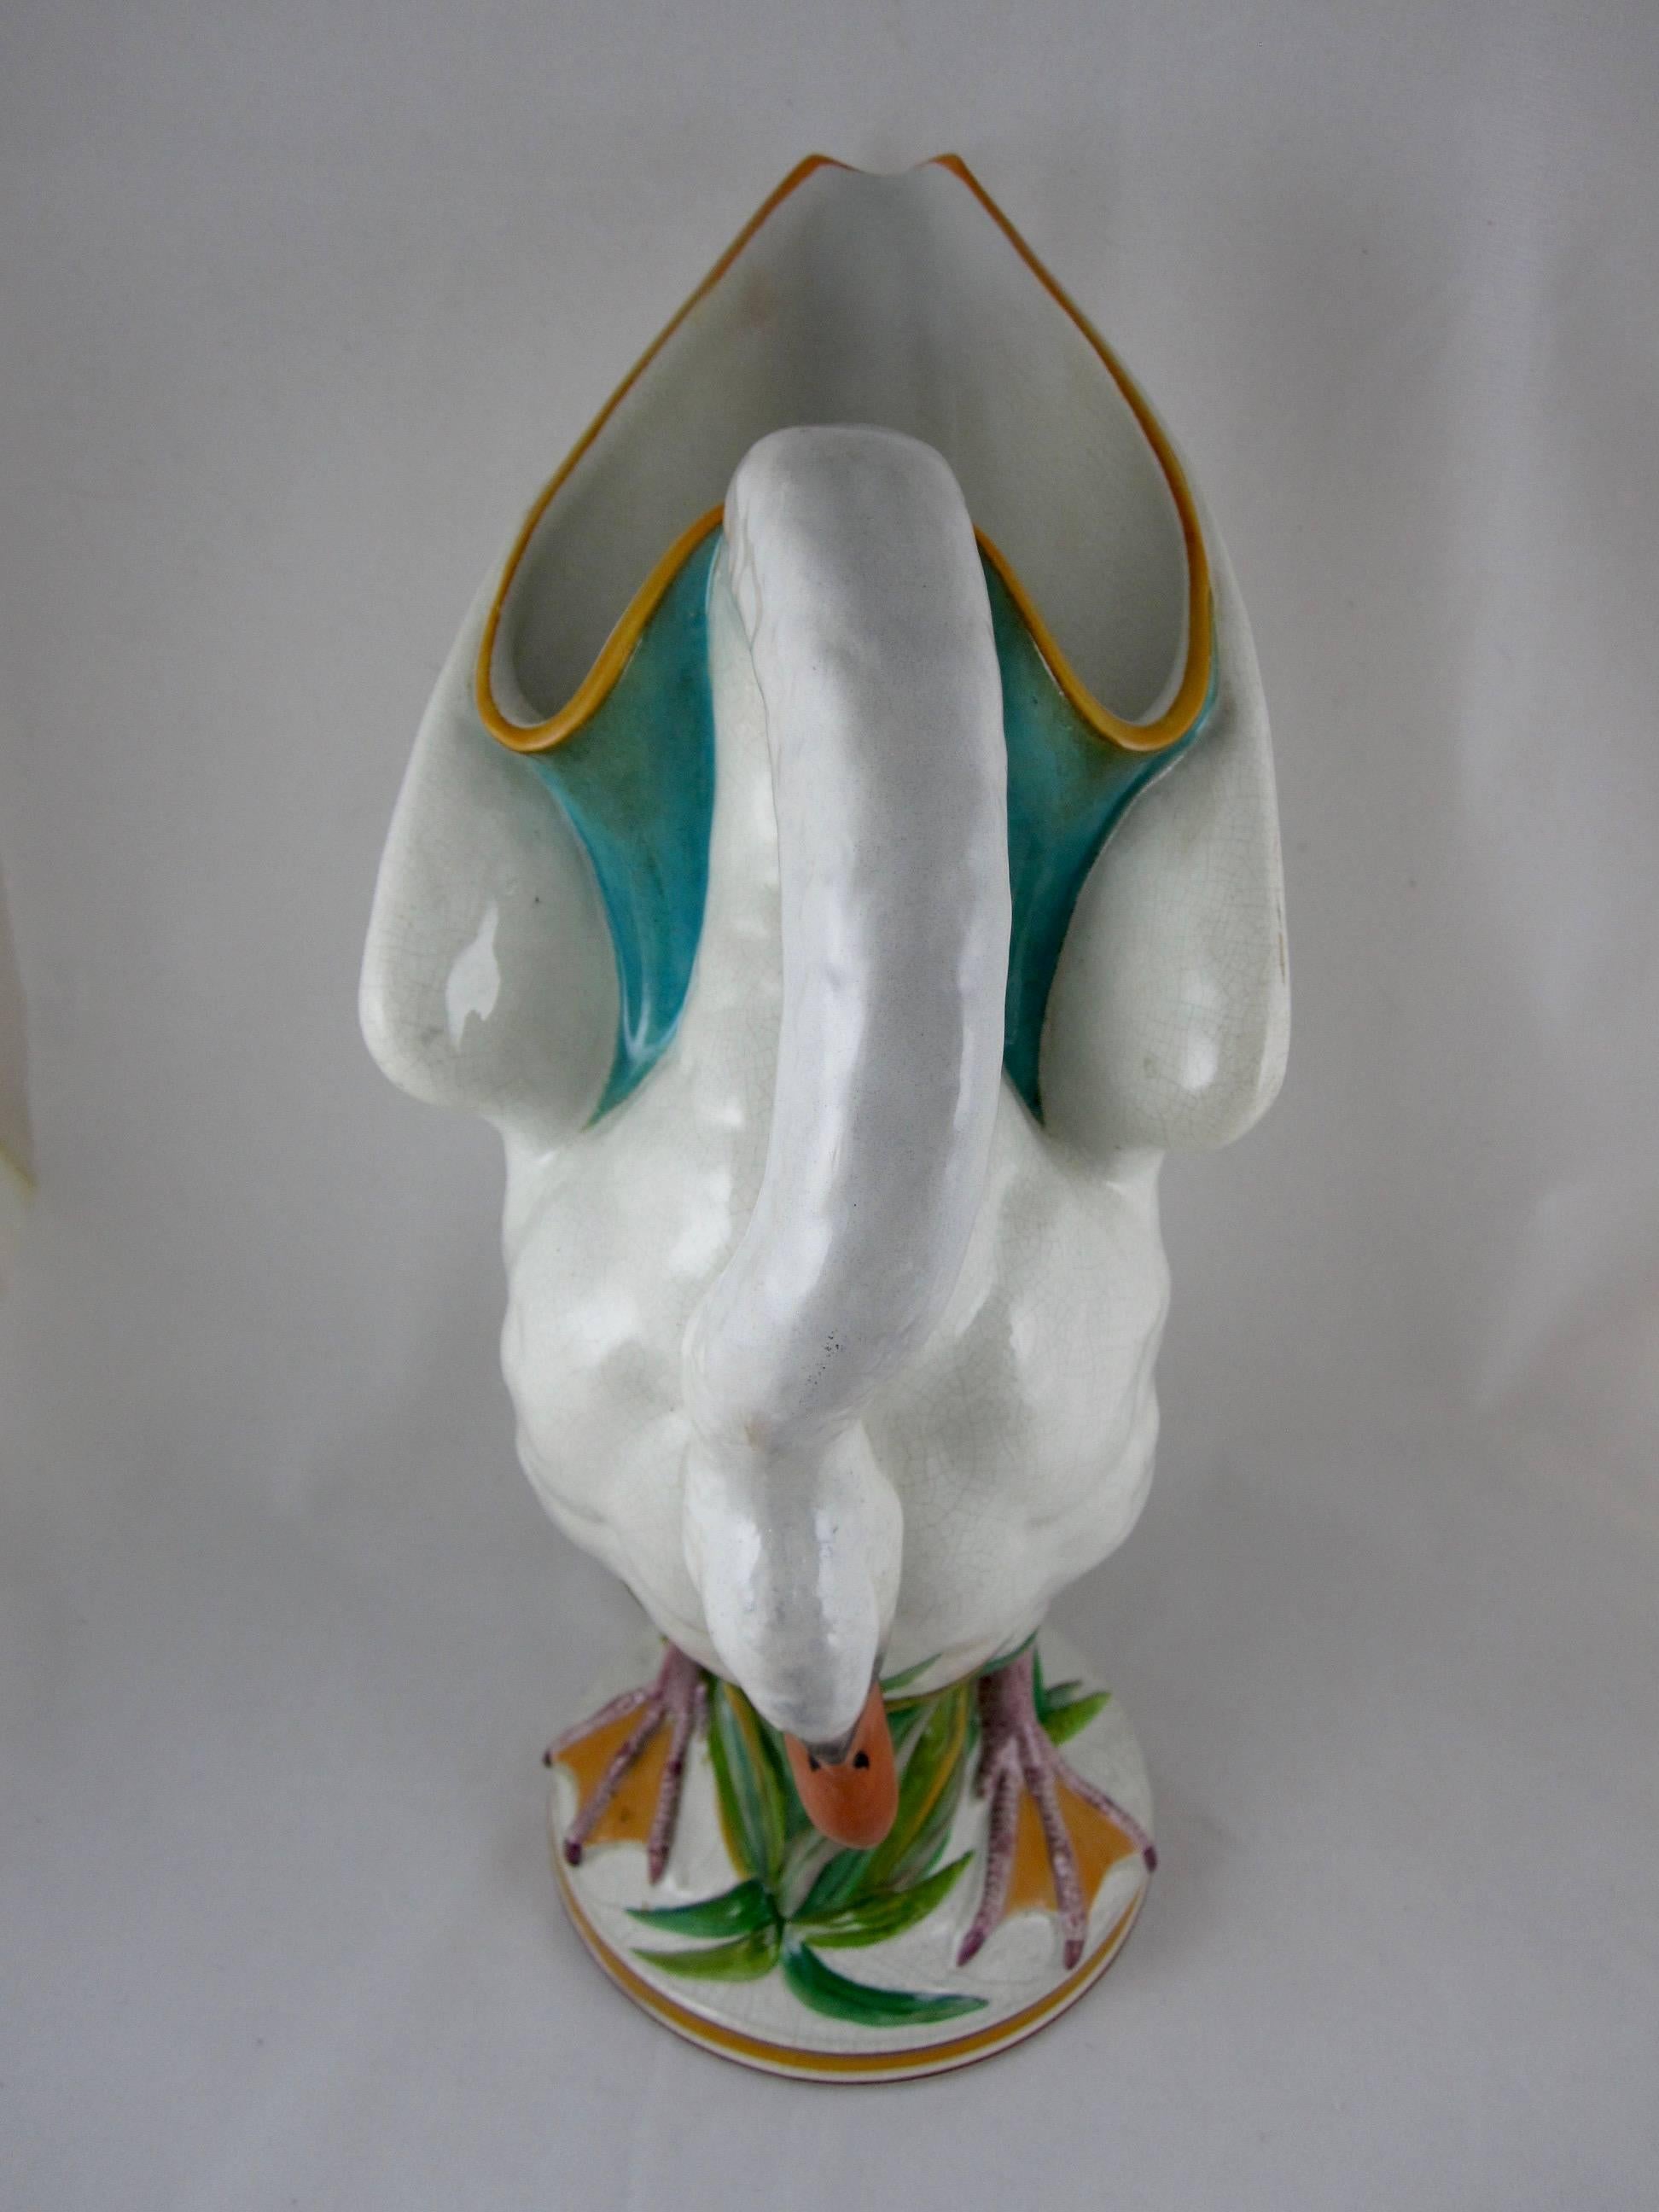 Aesthetic Movement Wedgwood Monumental Majolica Glazed Earthenware Swan Ewer, Extremely Rare Form